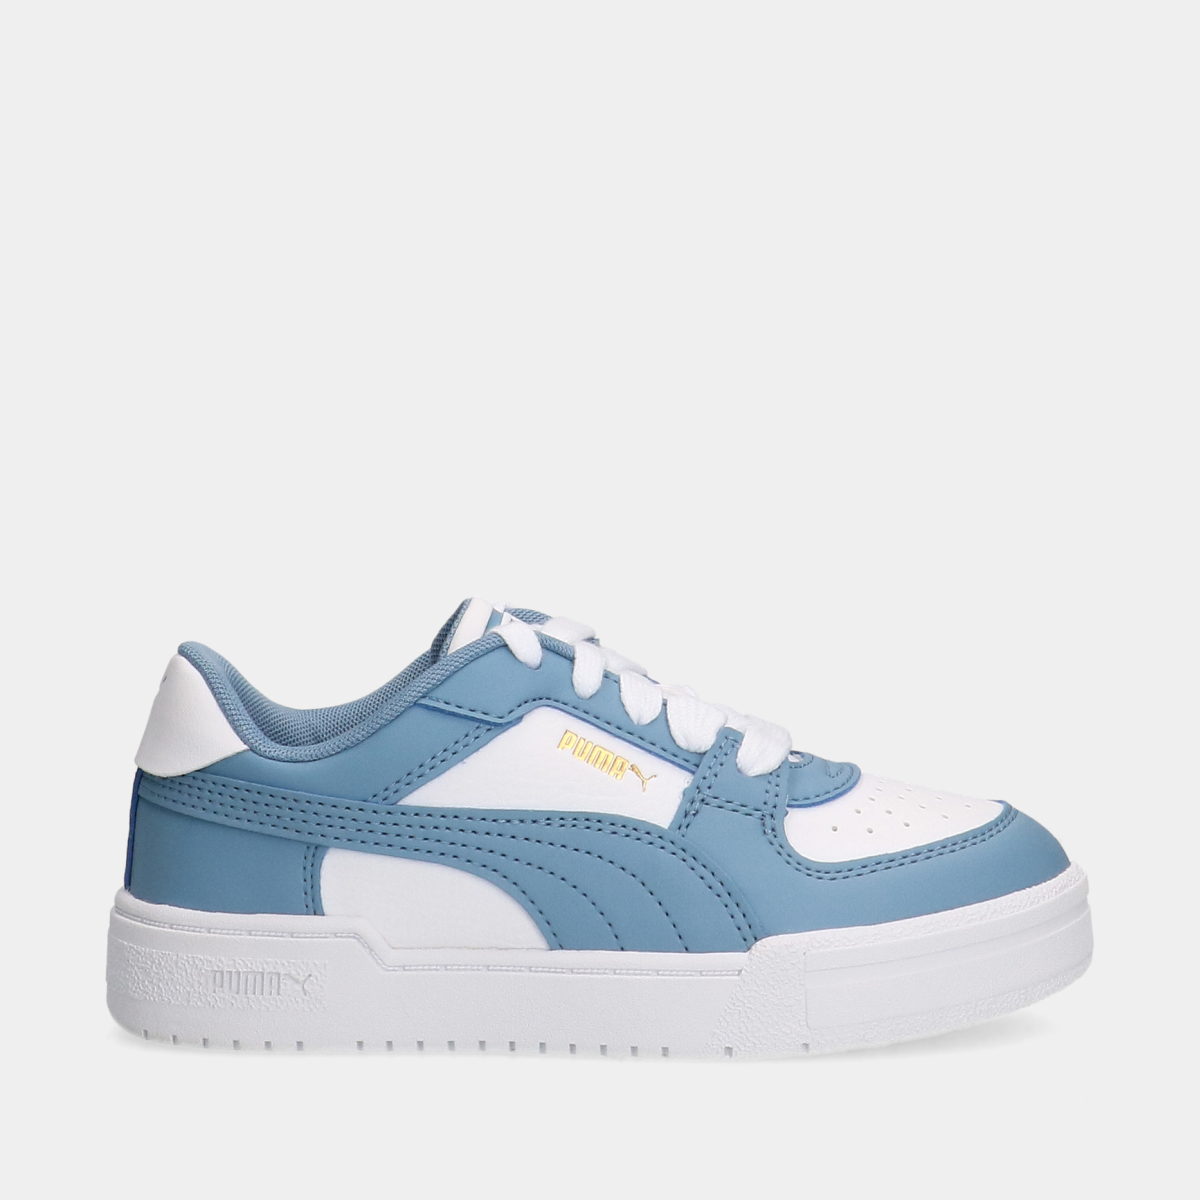 Puma CA pro classic white blue kinder sneakers